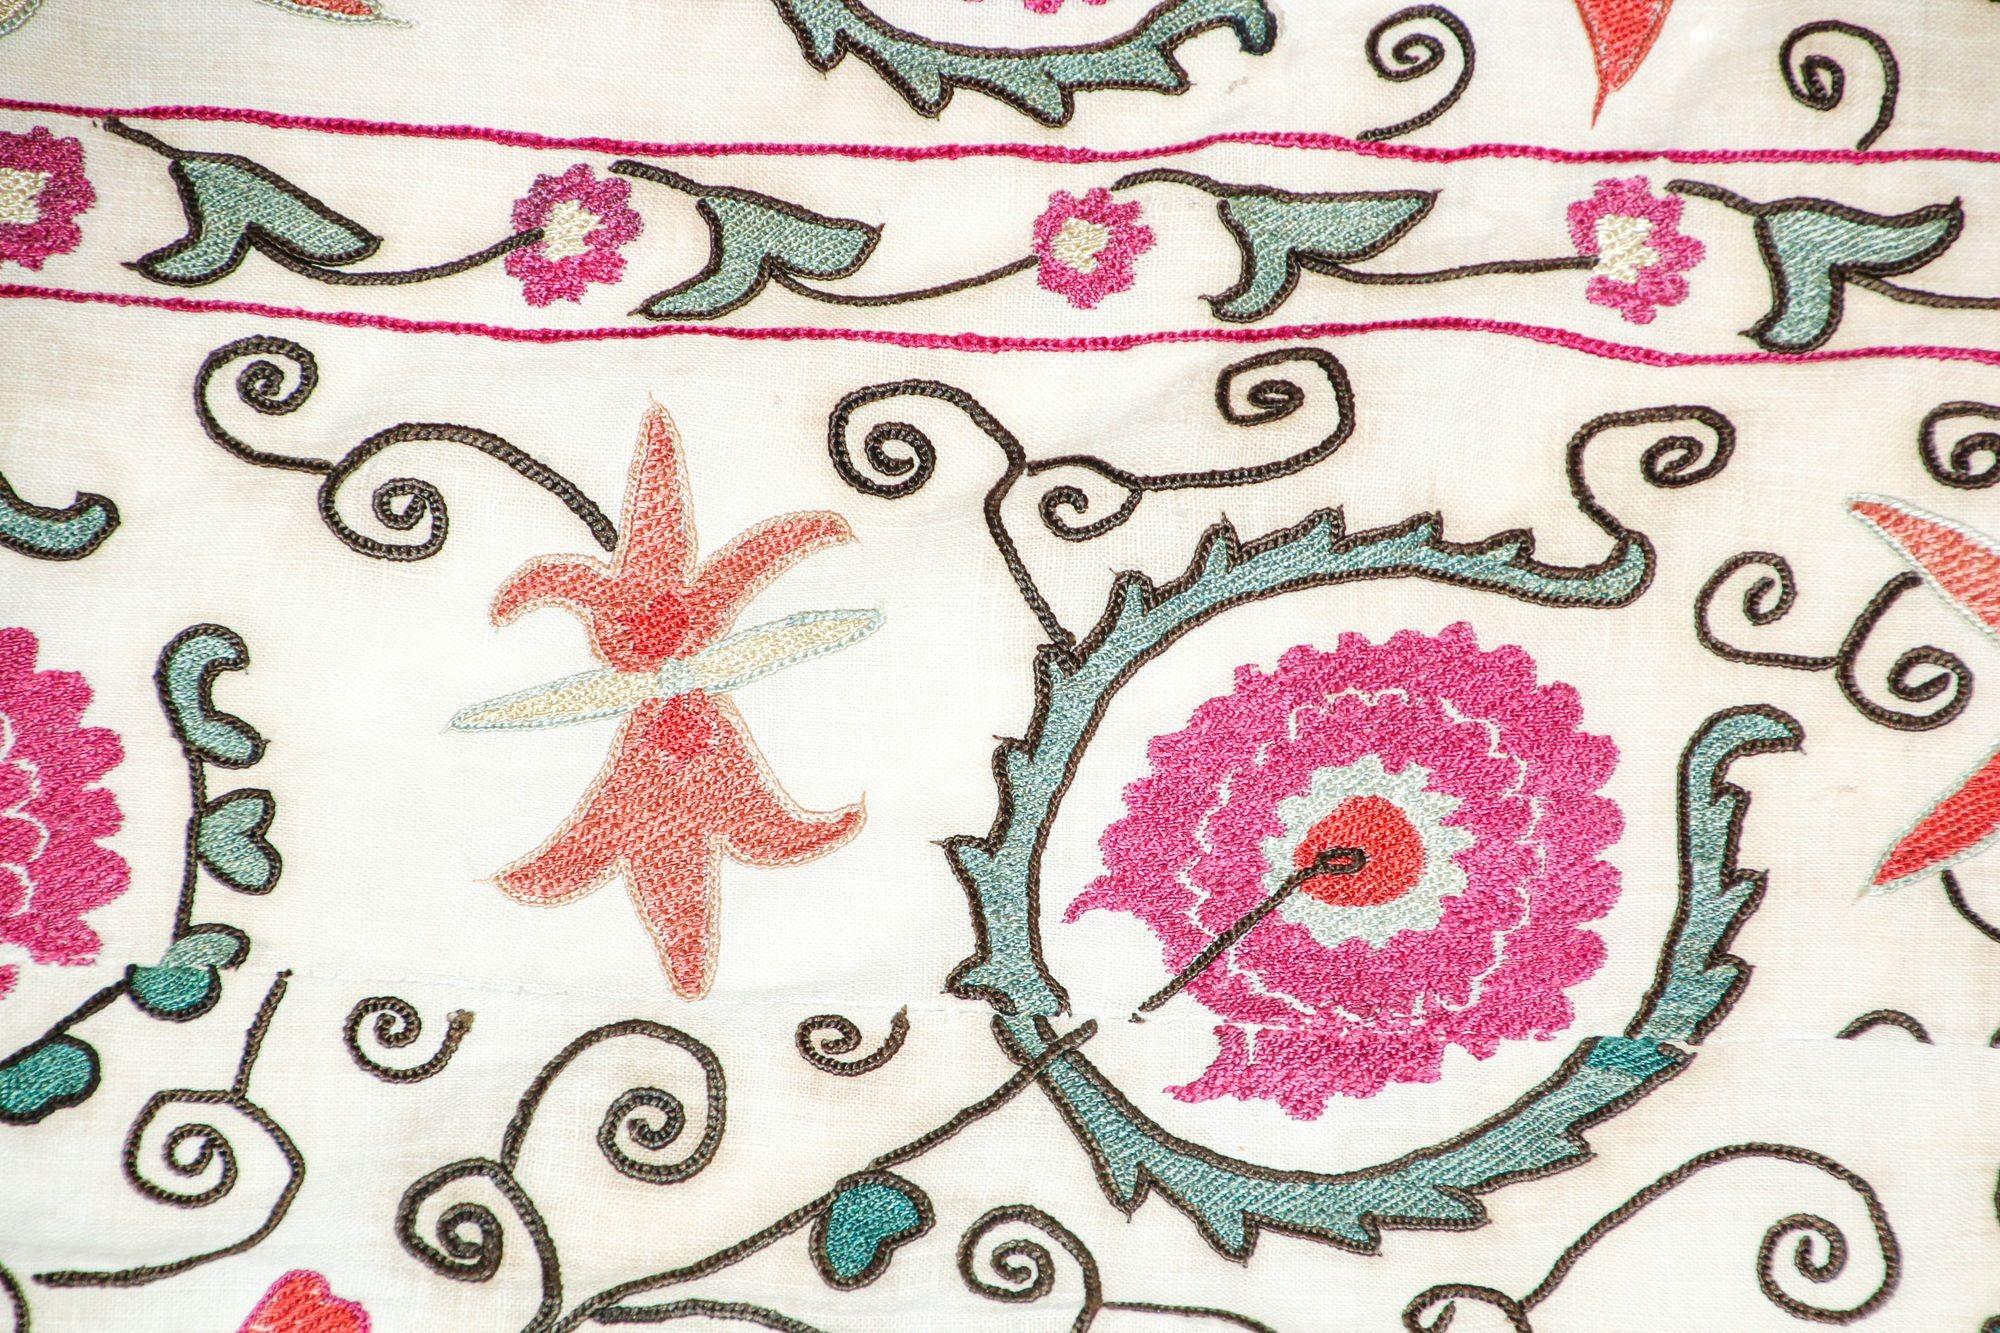 Dyed 19th C. Suzani Bukhara Uzbekistan Antique Embroidered Islamic Art Textile Susani For Sale